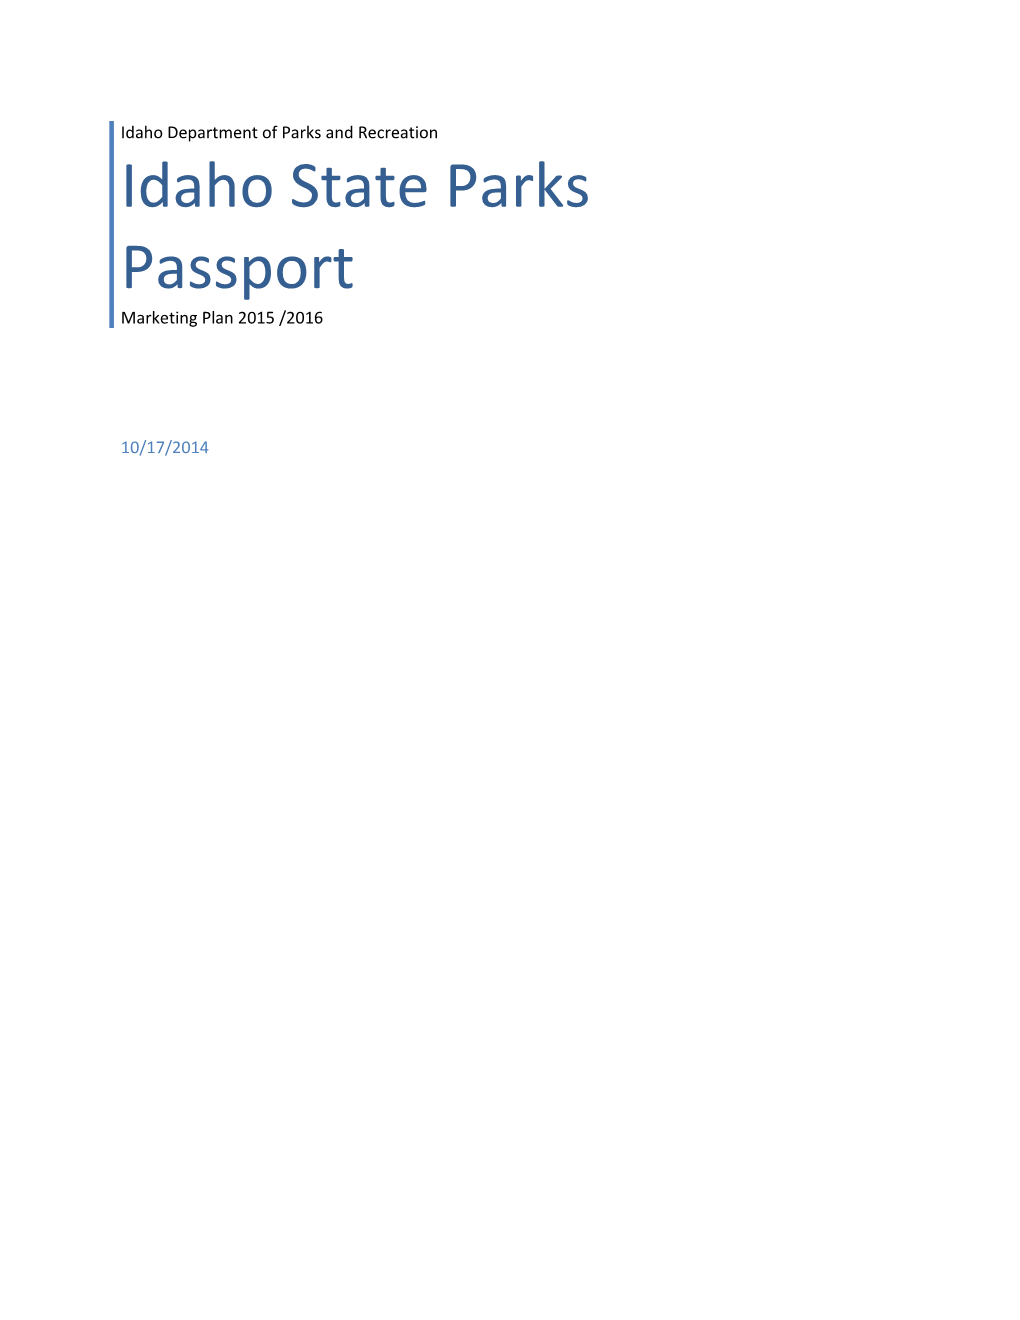 Idaho State Parks Passport